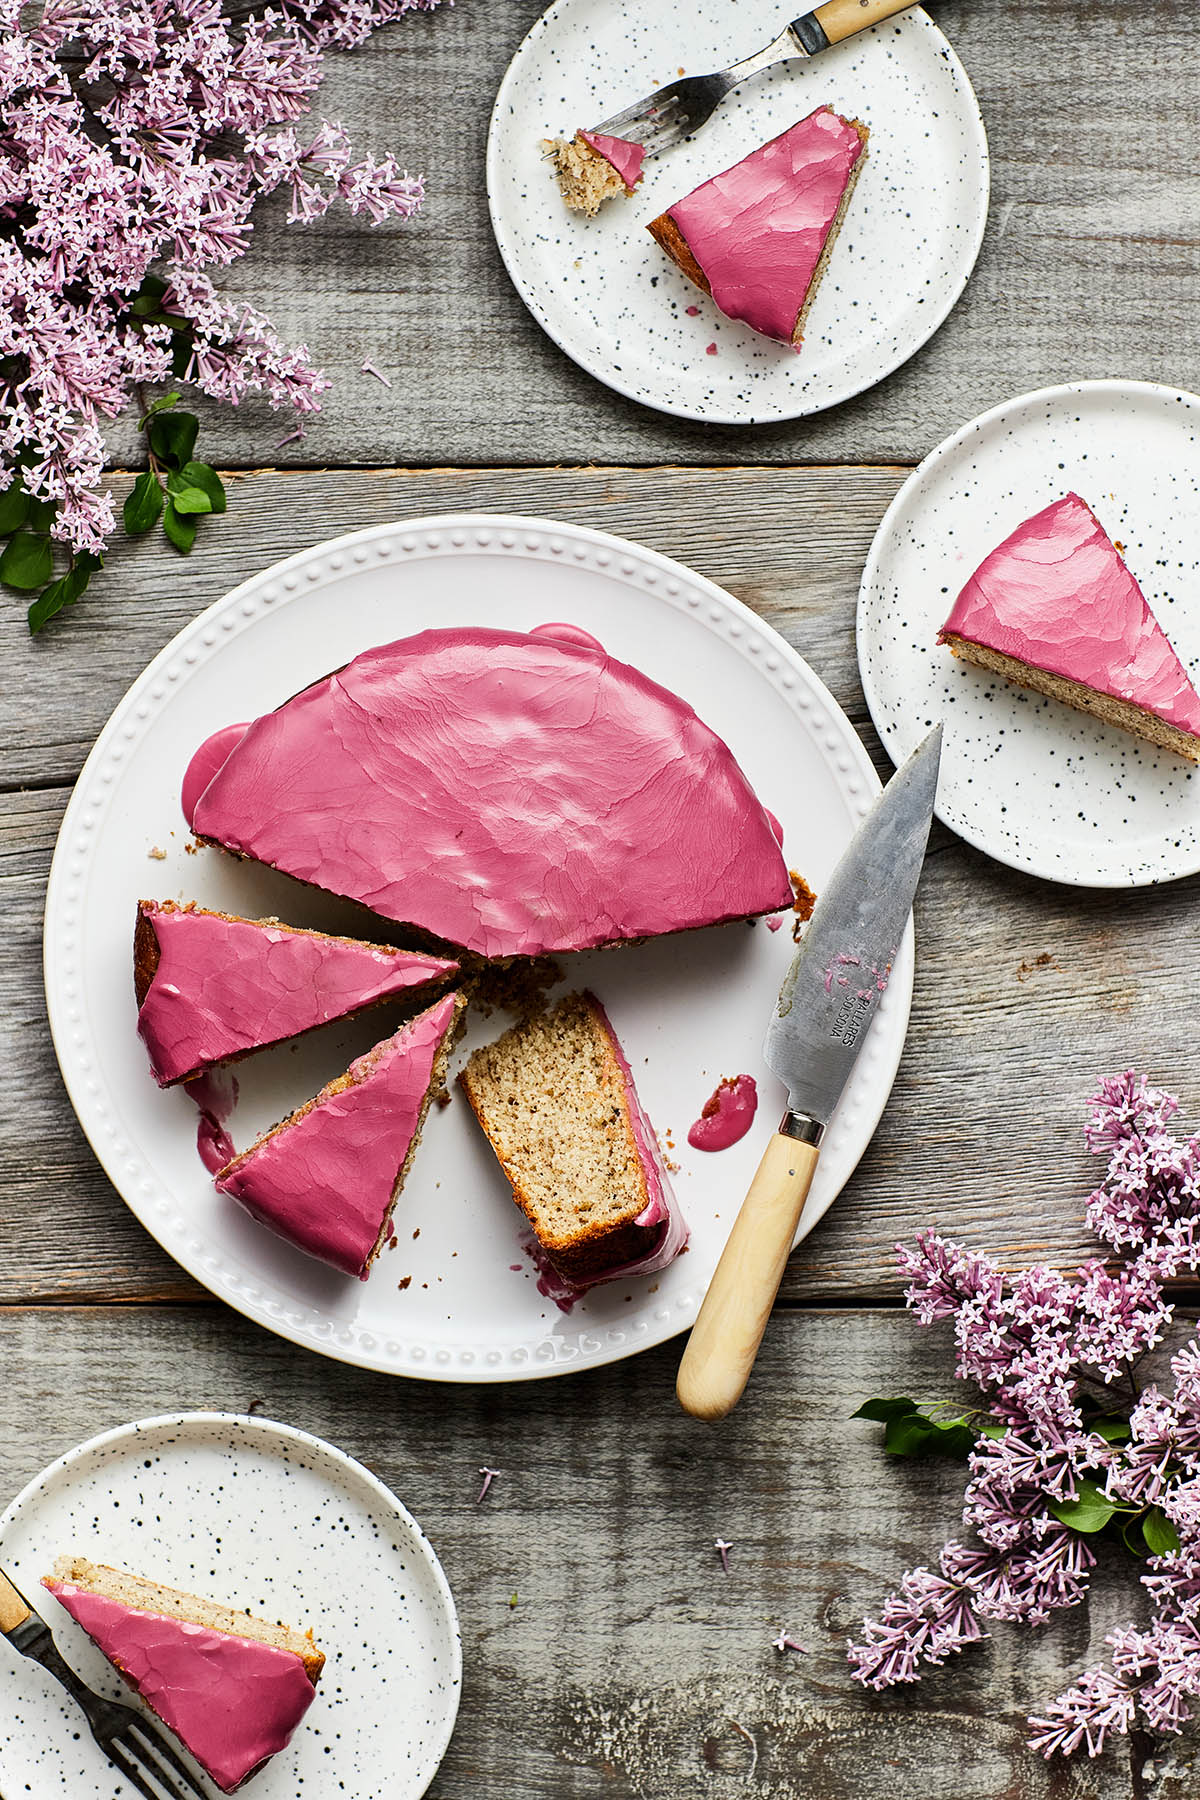 Pink glaze ona cace, served sliced on a white plate with knife